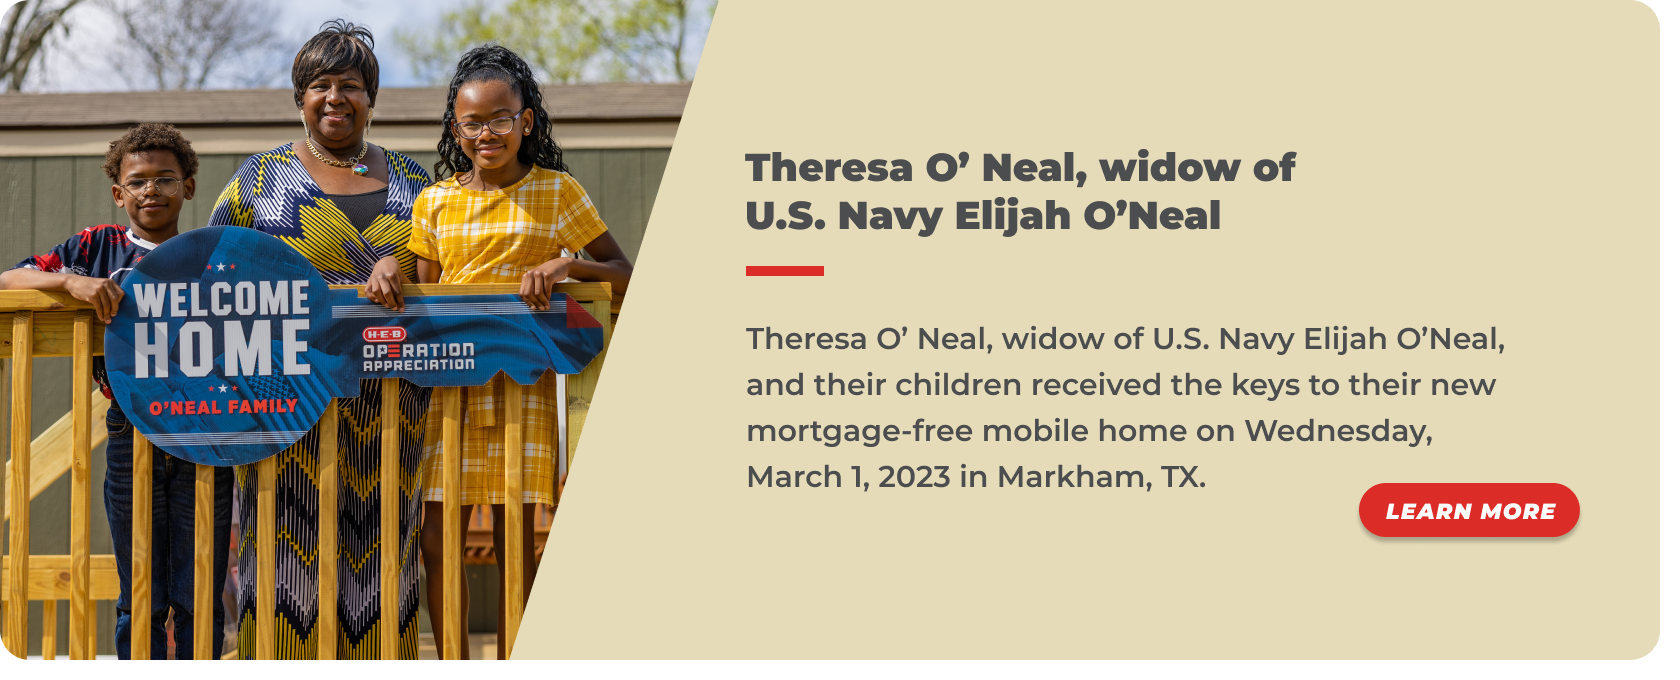 41 - Theresa O’ Neal, widow of U.S. Navy Elijah O’Neal